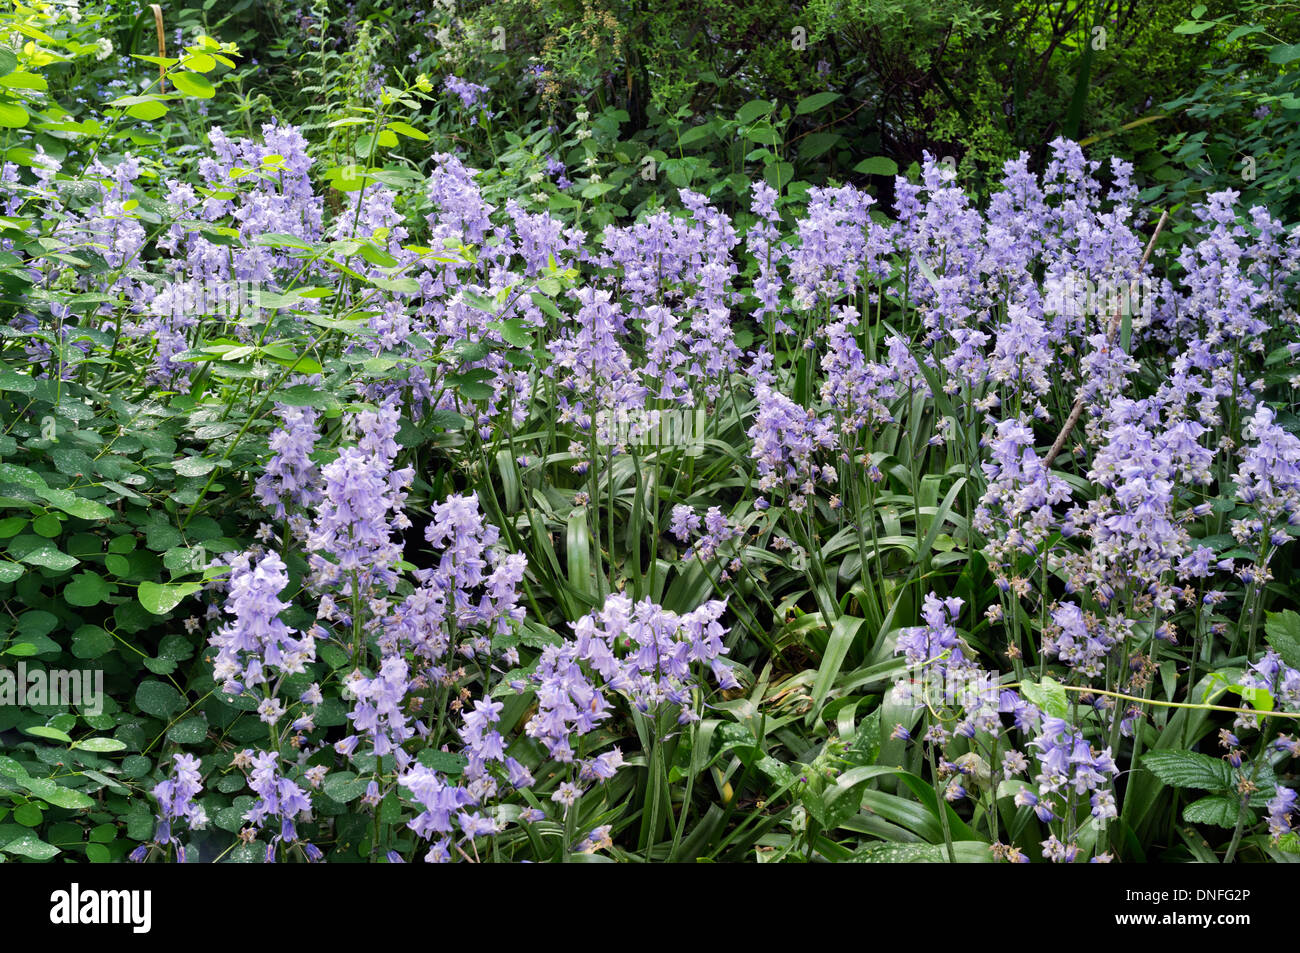 Group of Spanish bluebells Spring flowering plants near the banks of Regents Canal Camden London UK Stock Photo